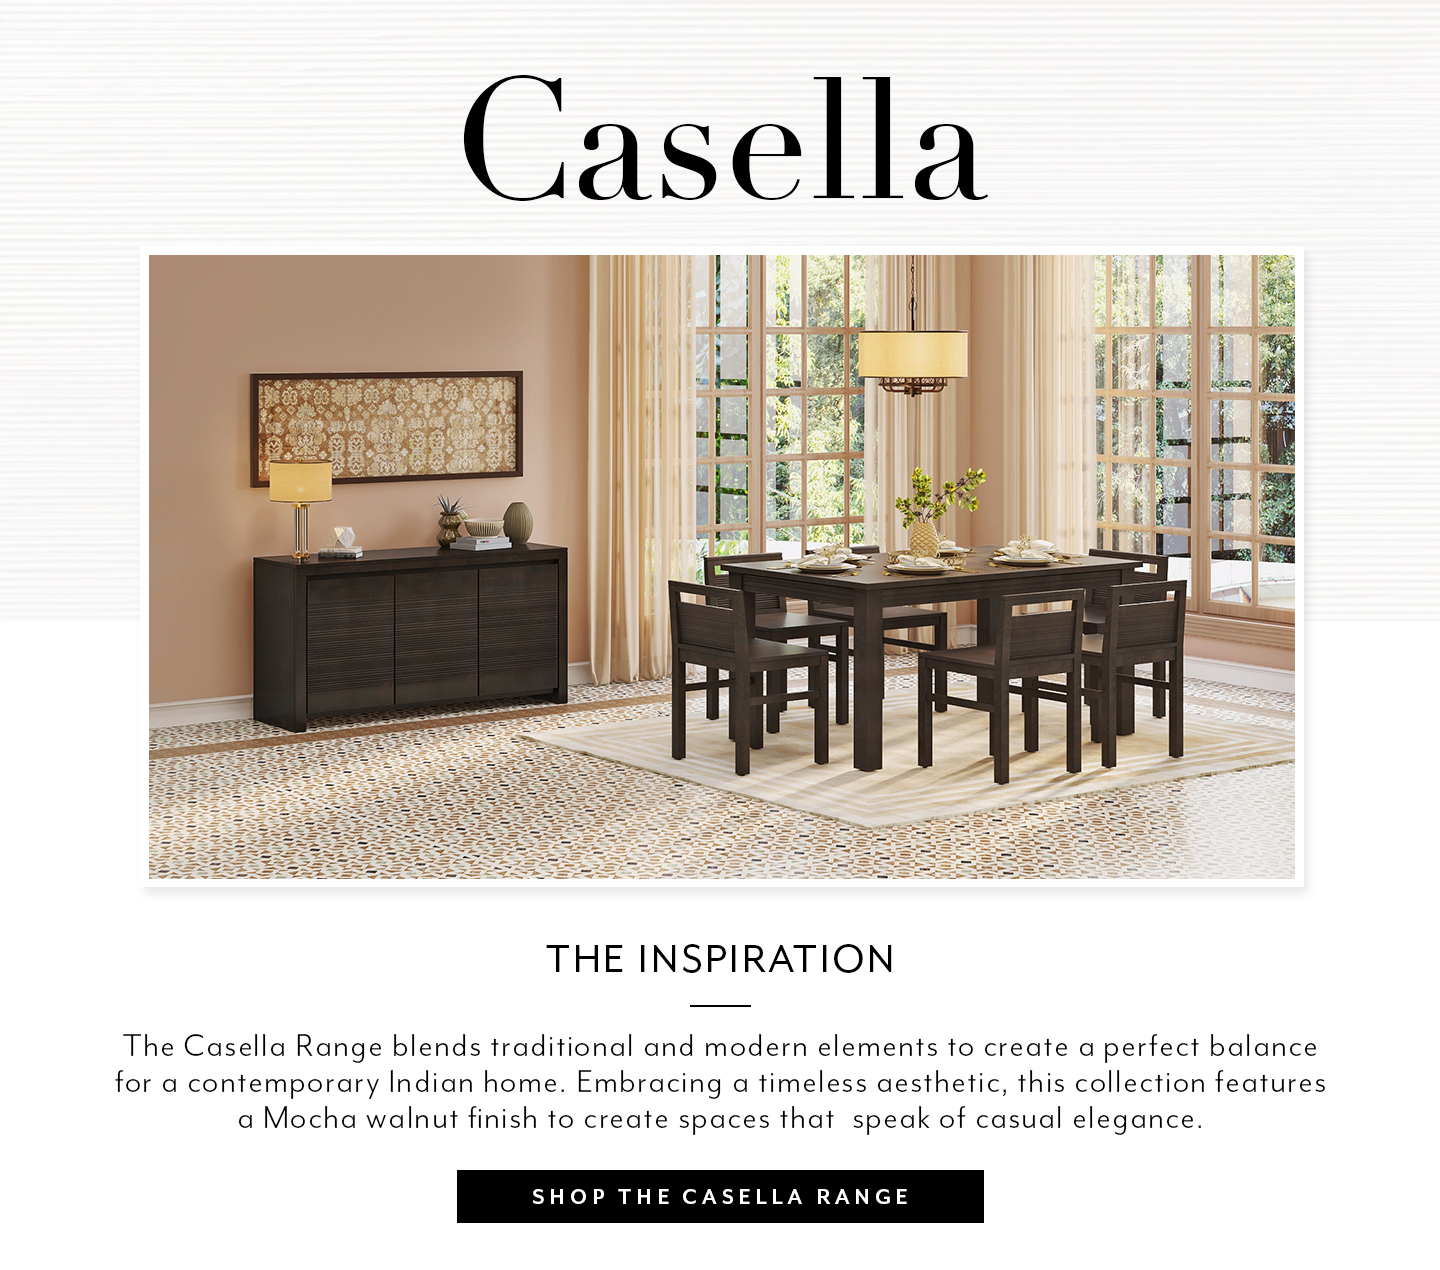 Casella Range Furniture Collection by Urban Ladder
